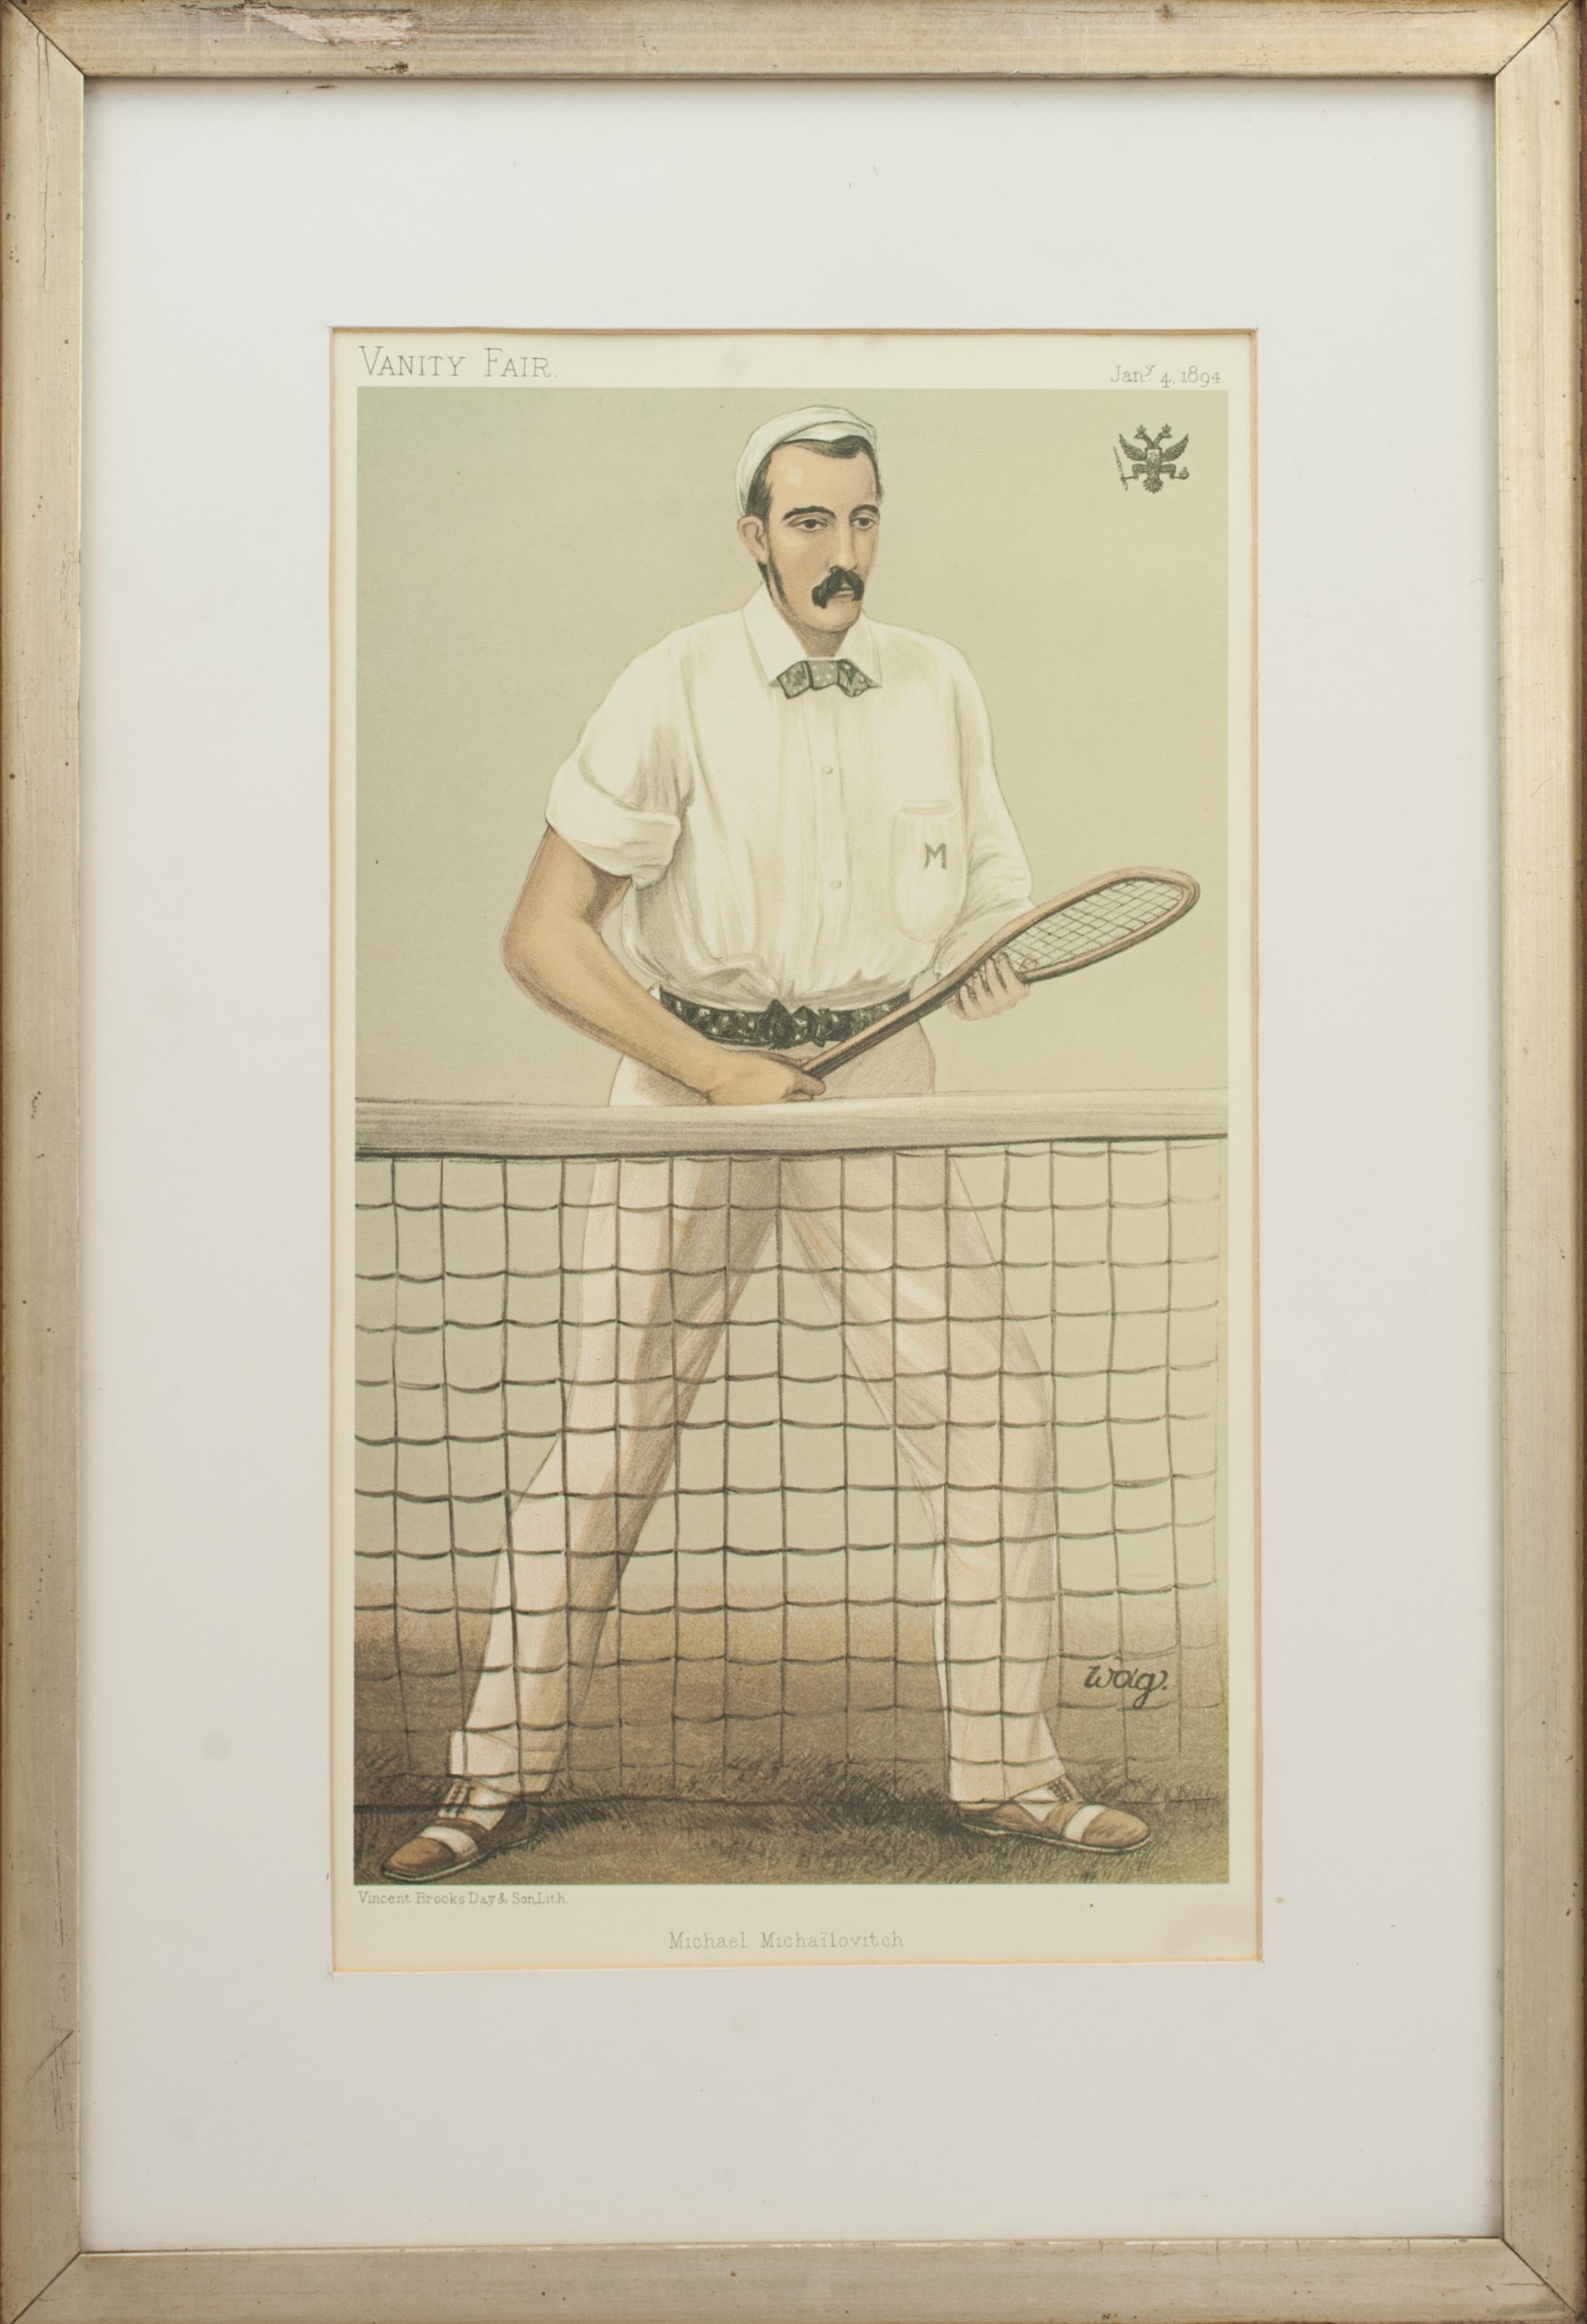 Sporting Art Vintage Tennis Vanity Fair Print of Michailovitch Of Russia For Sale